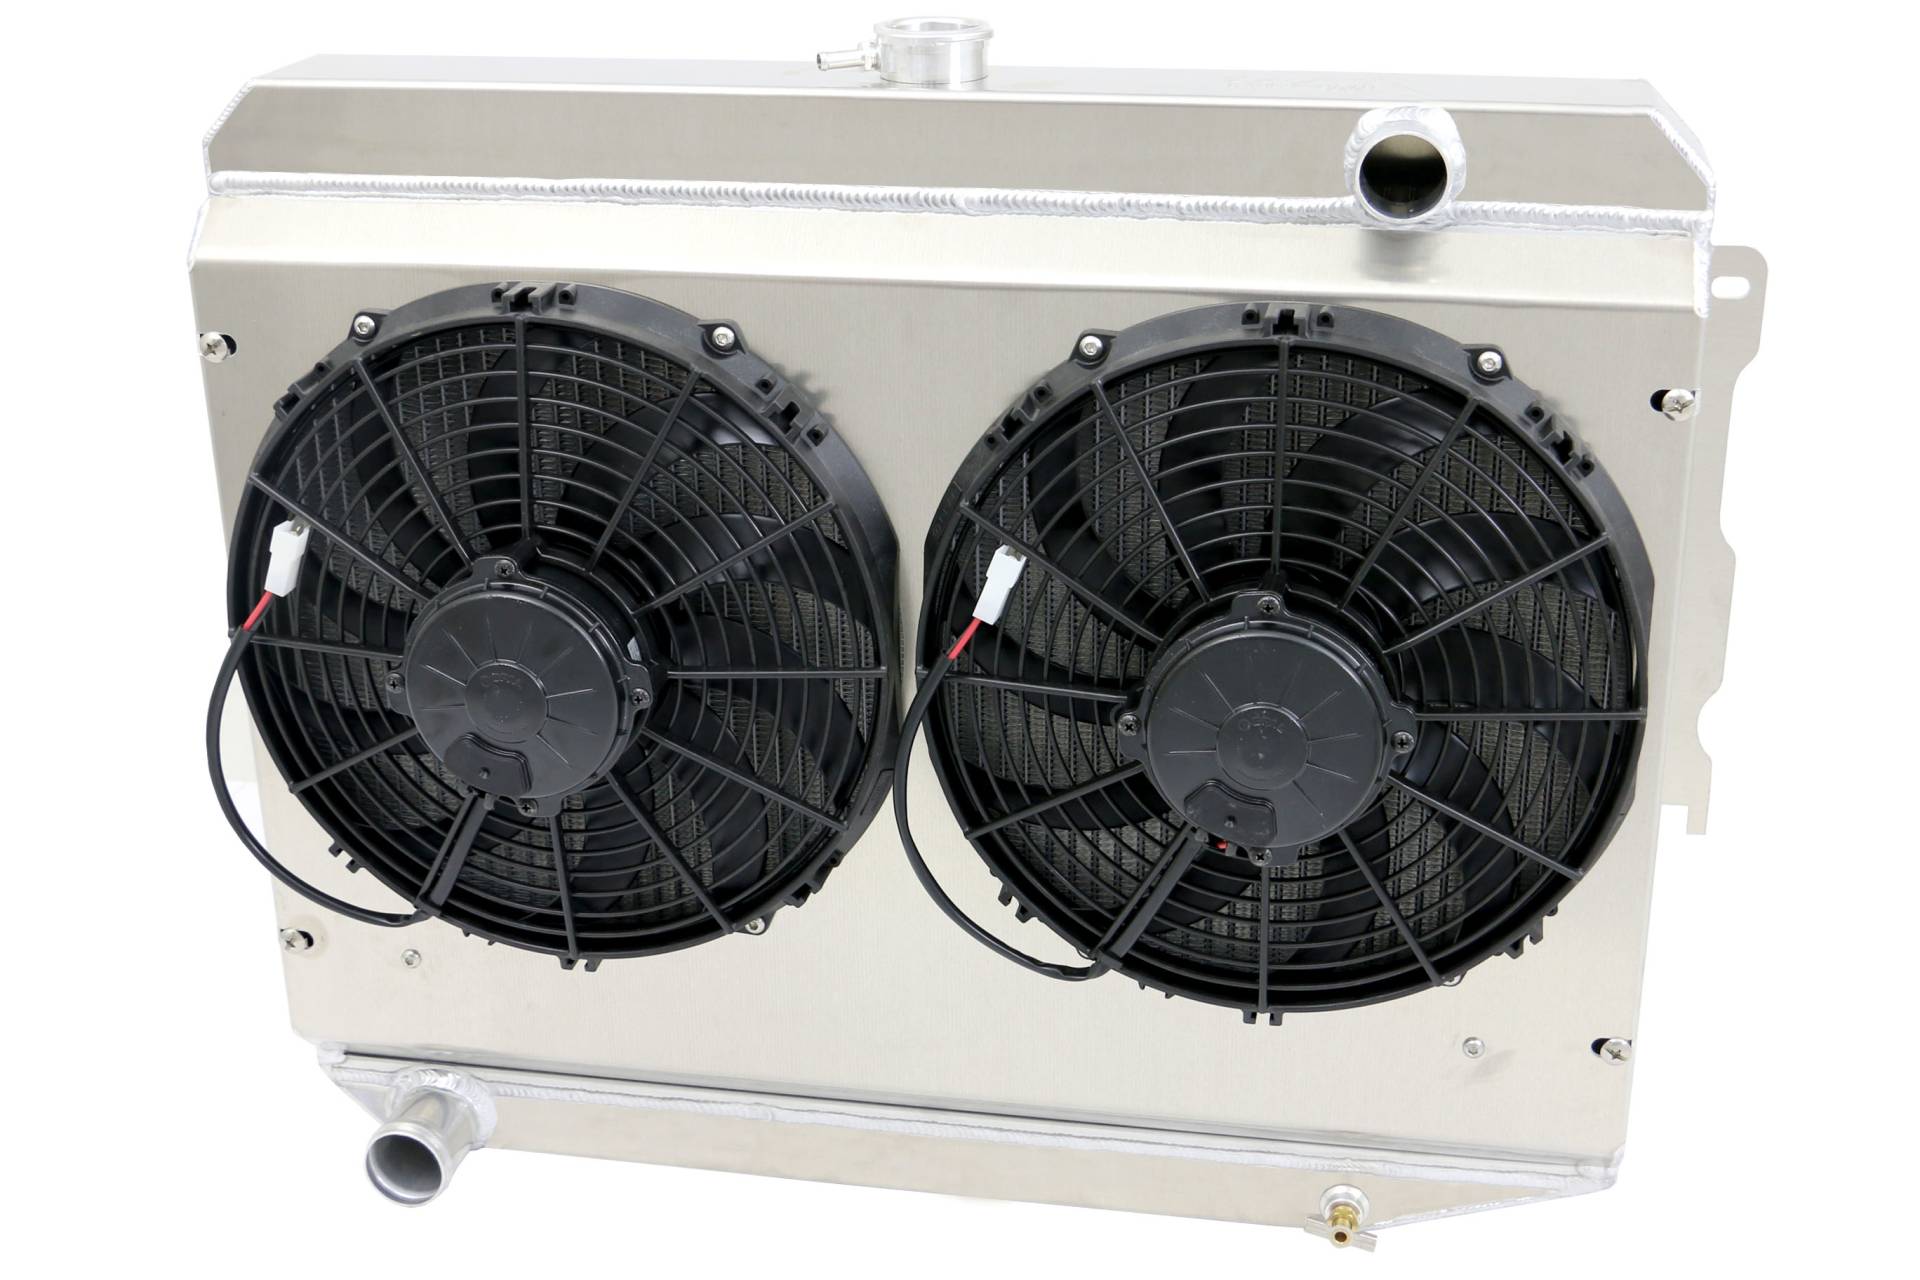 Wizard Cooling Inc - Wizard Cooling - 1970-73 26" B/B Mopar Applications Aluminum Radiator (w/ Standard Brush Style Fans) - 375-102LP